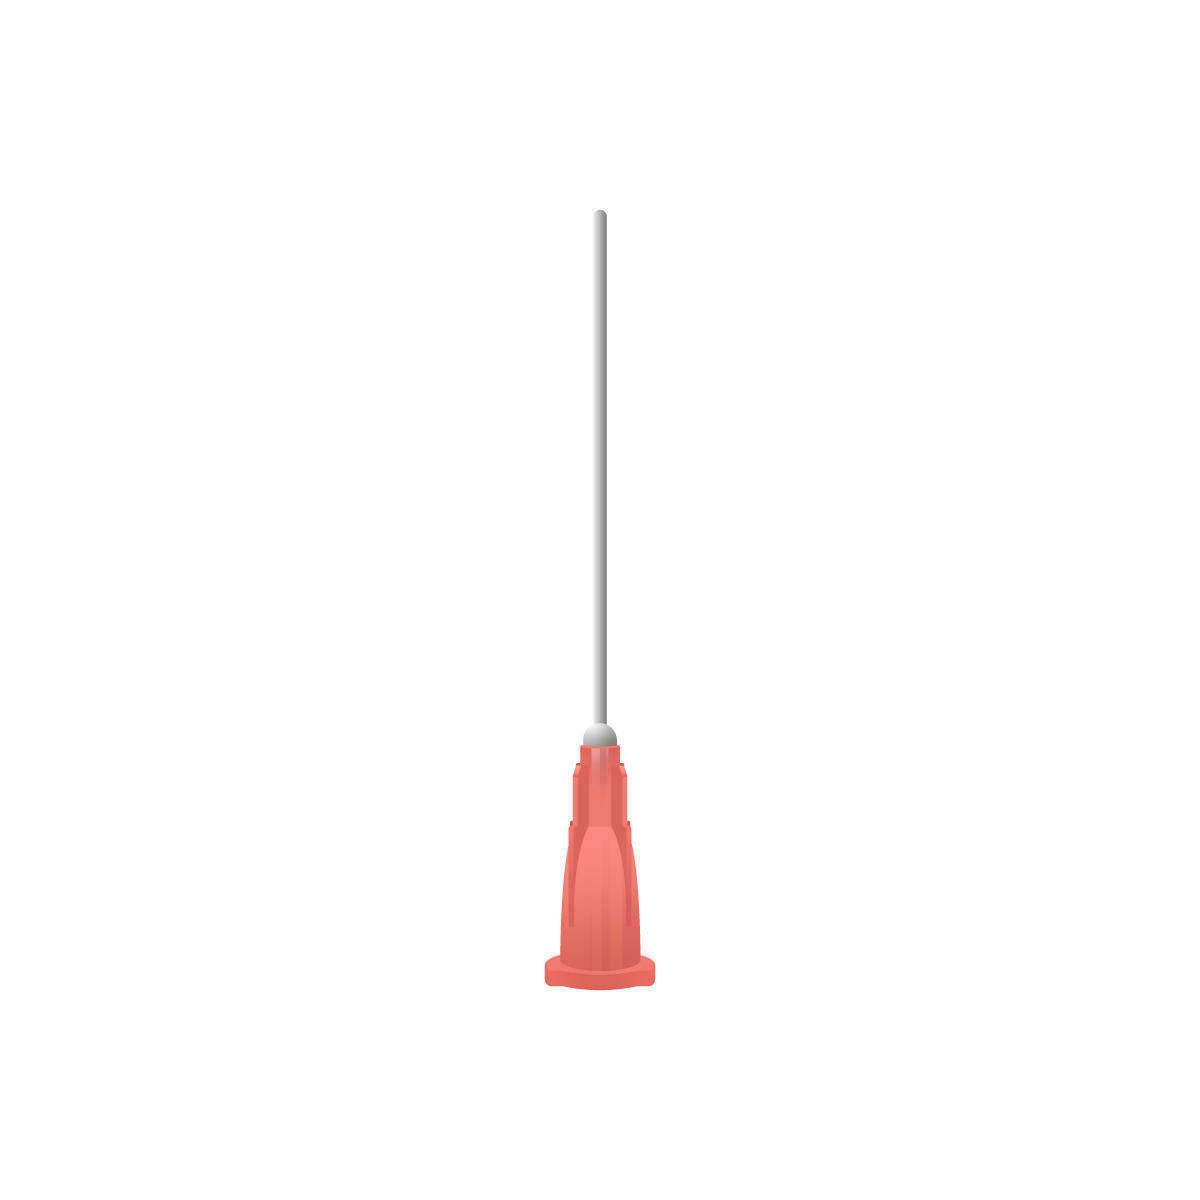 18g Red 1.5 inch Blunt BBraun Sterican Mix Needle - UKMEDI